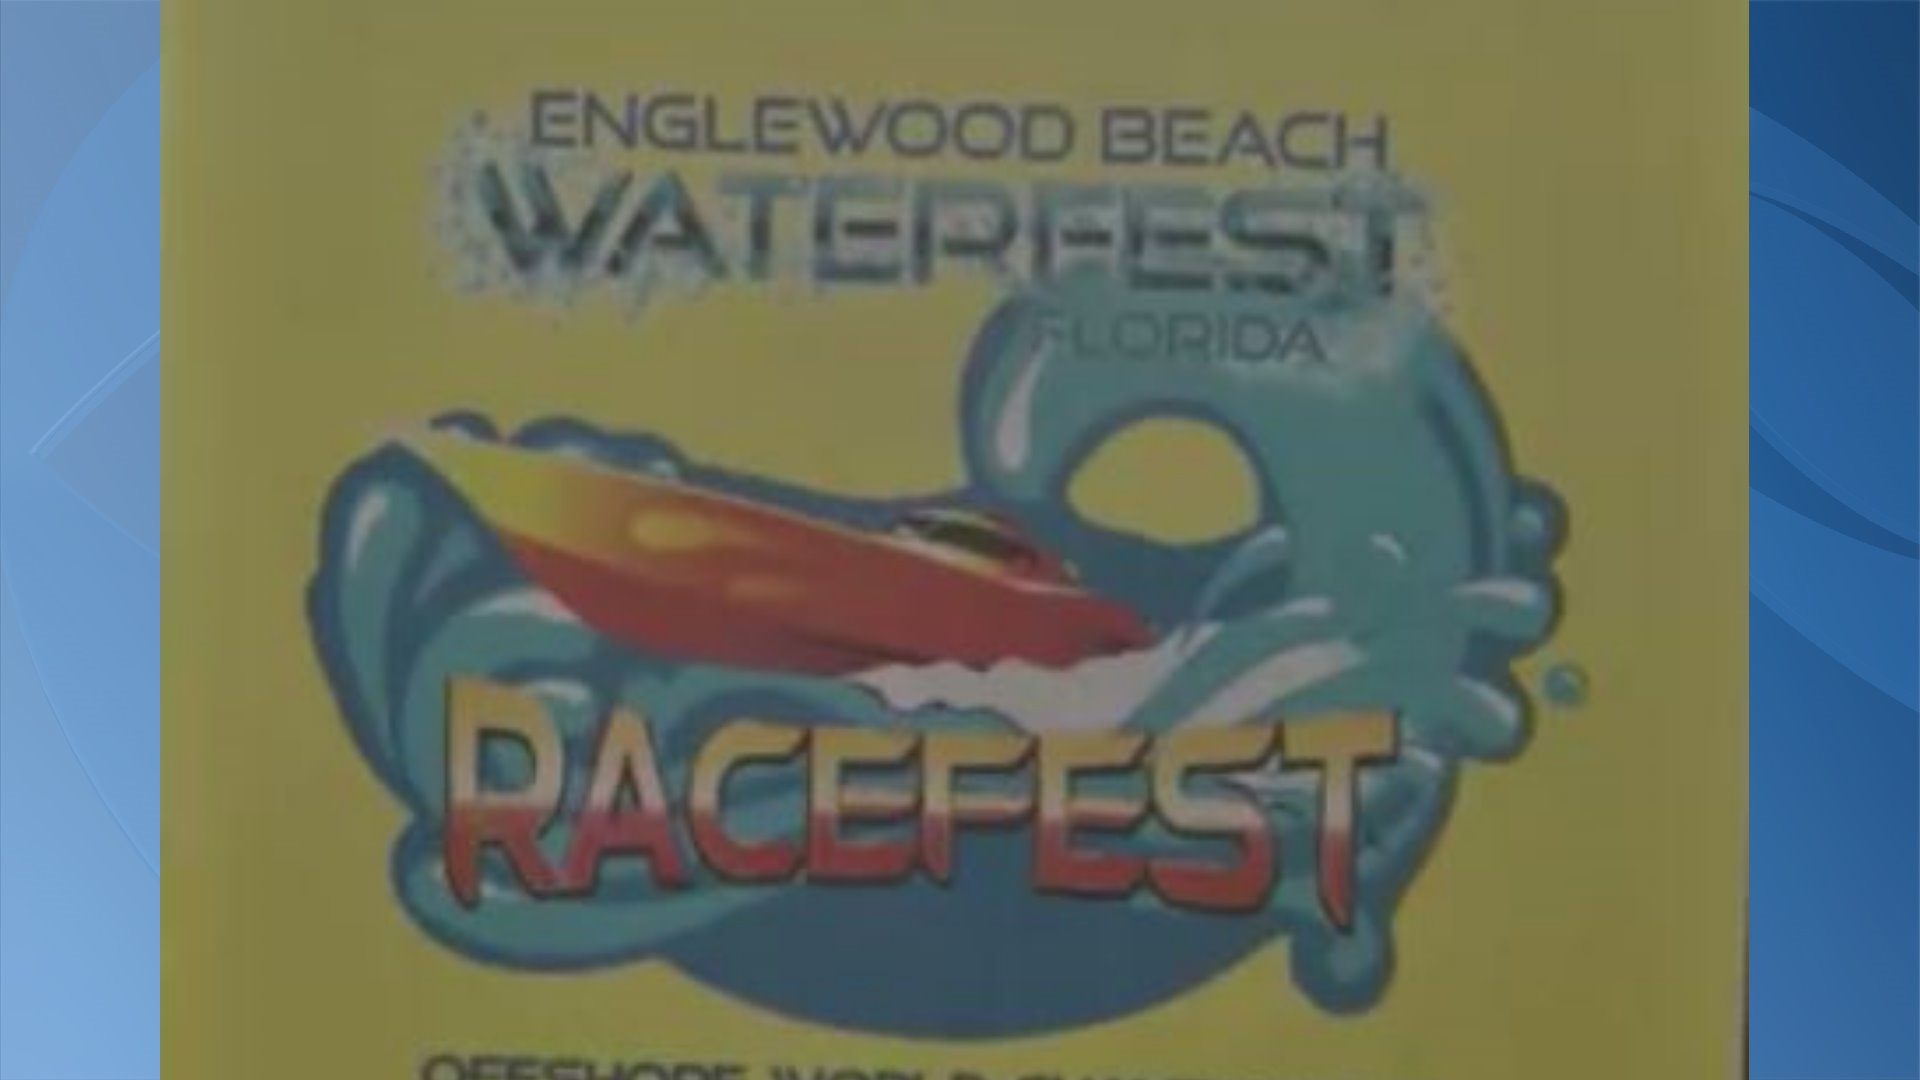 Waterfest returns to Englewood Beach